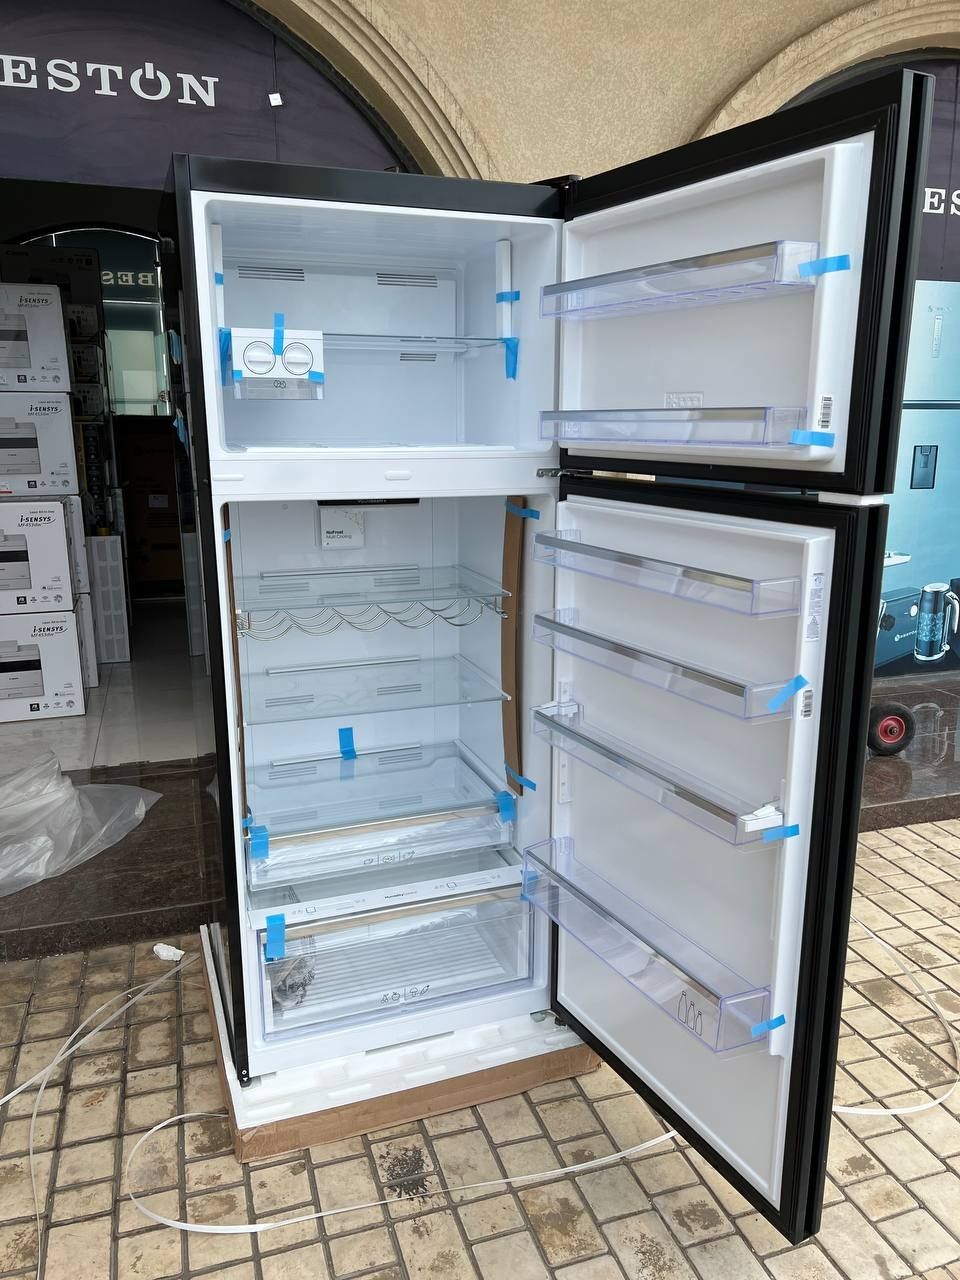 Beston refrigerator BC-820BL